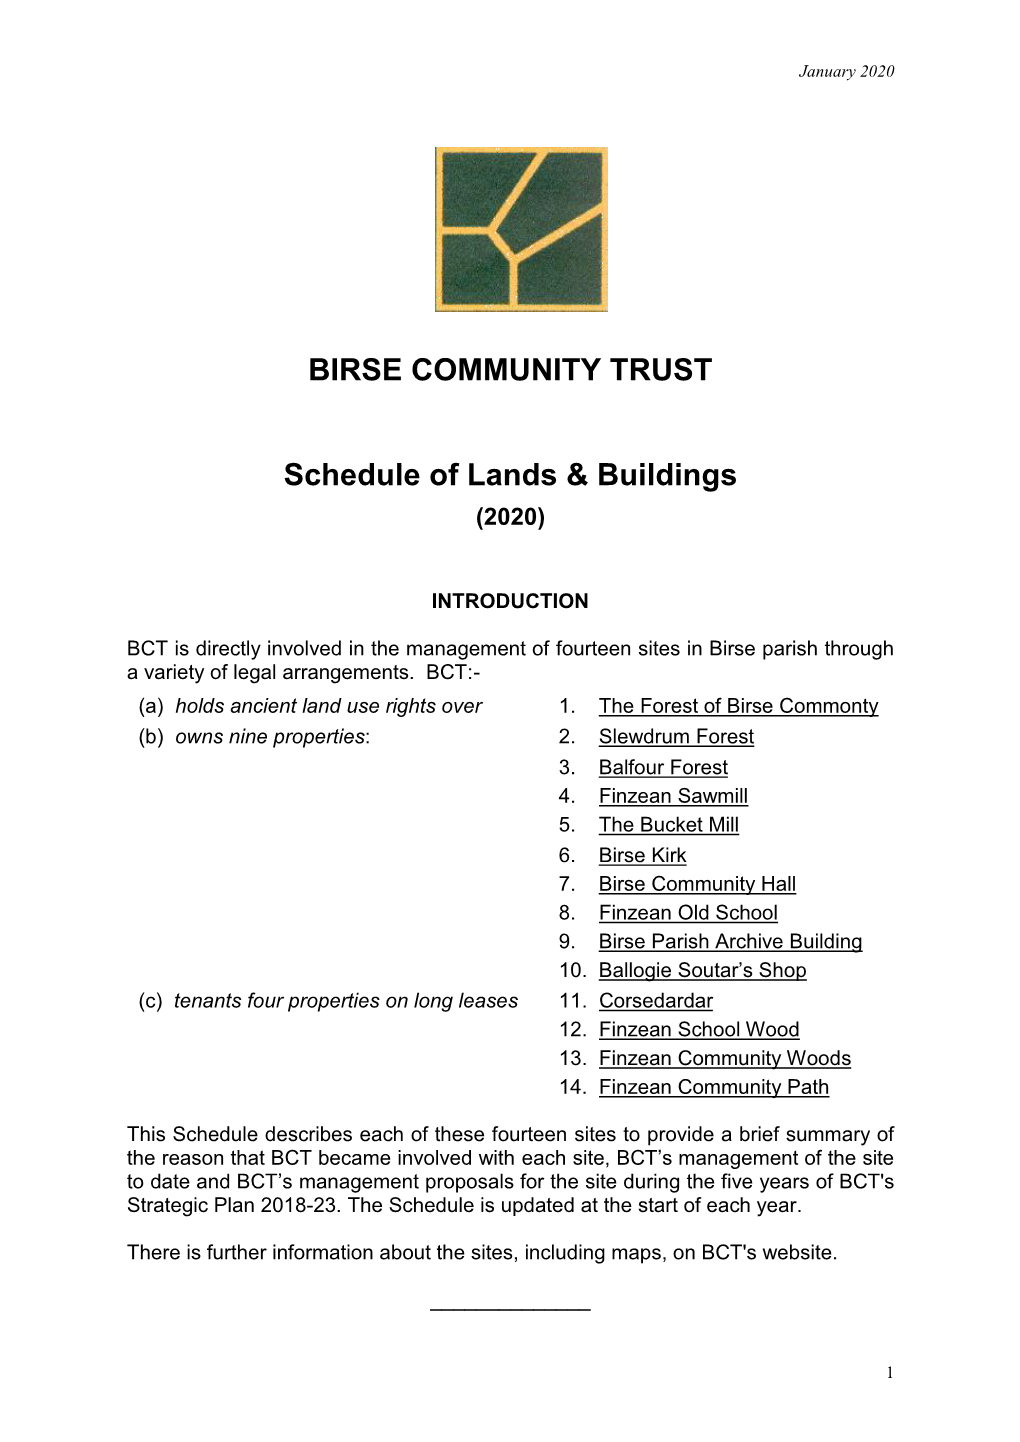 BIRSE COMMUNITY TRUST Schedule of Lands & Buildings